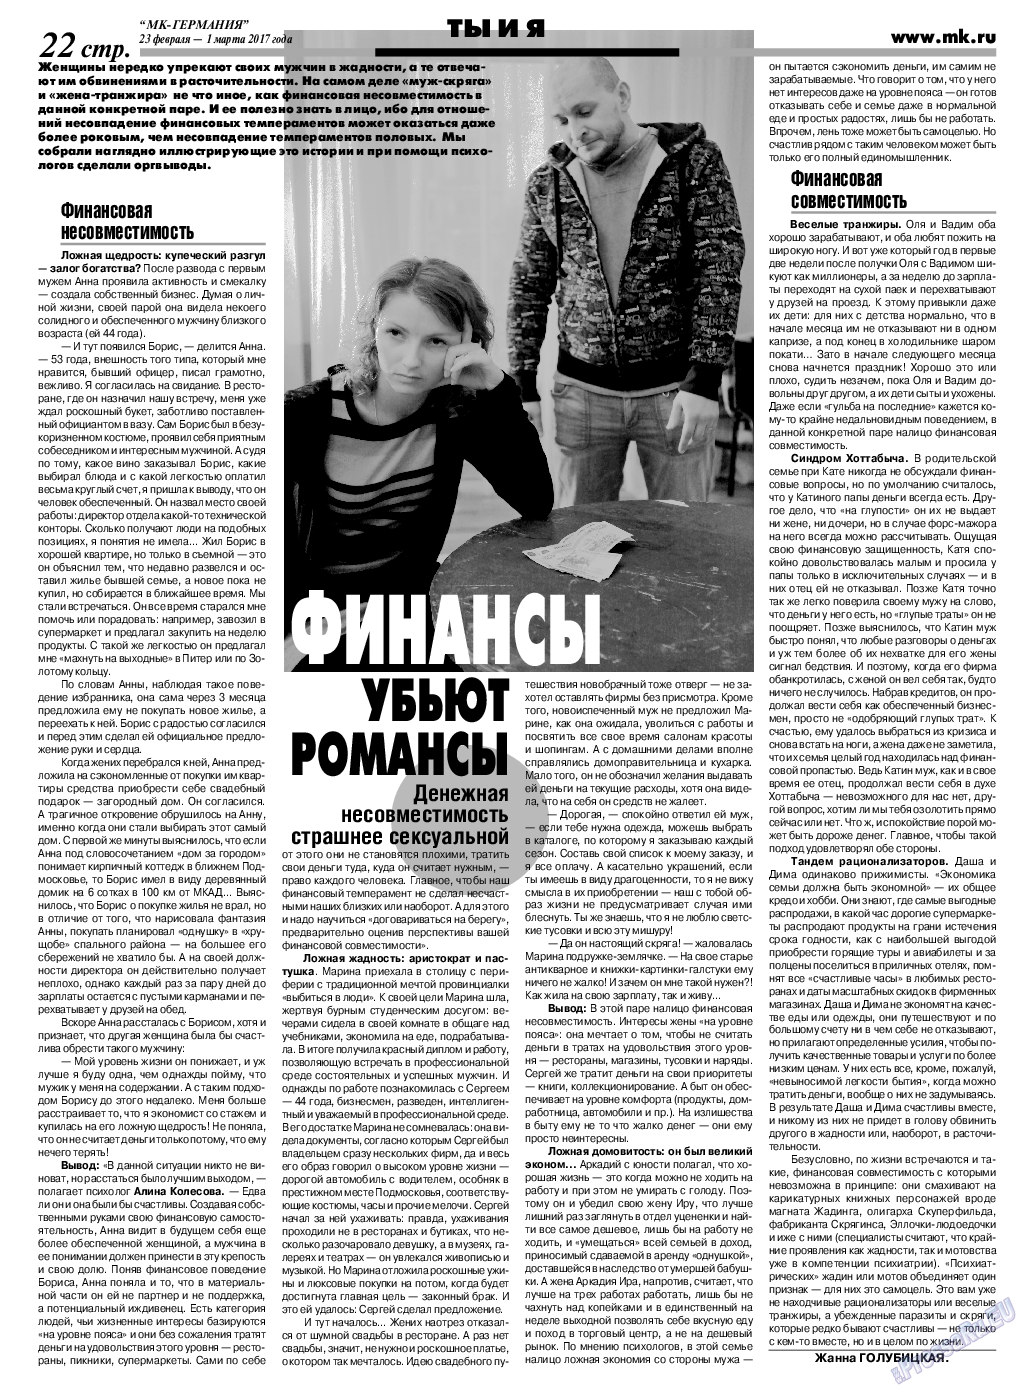 МК-Германия, газета. 2017 №9 стр.22